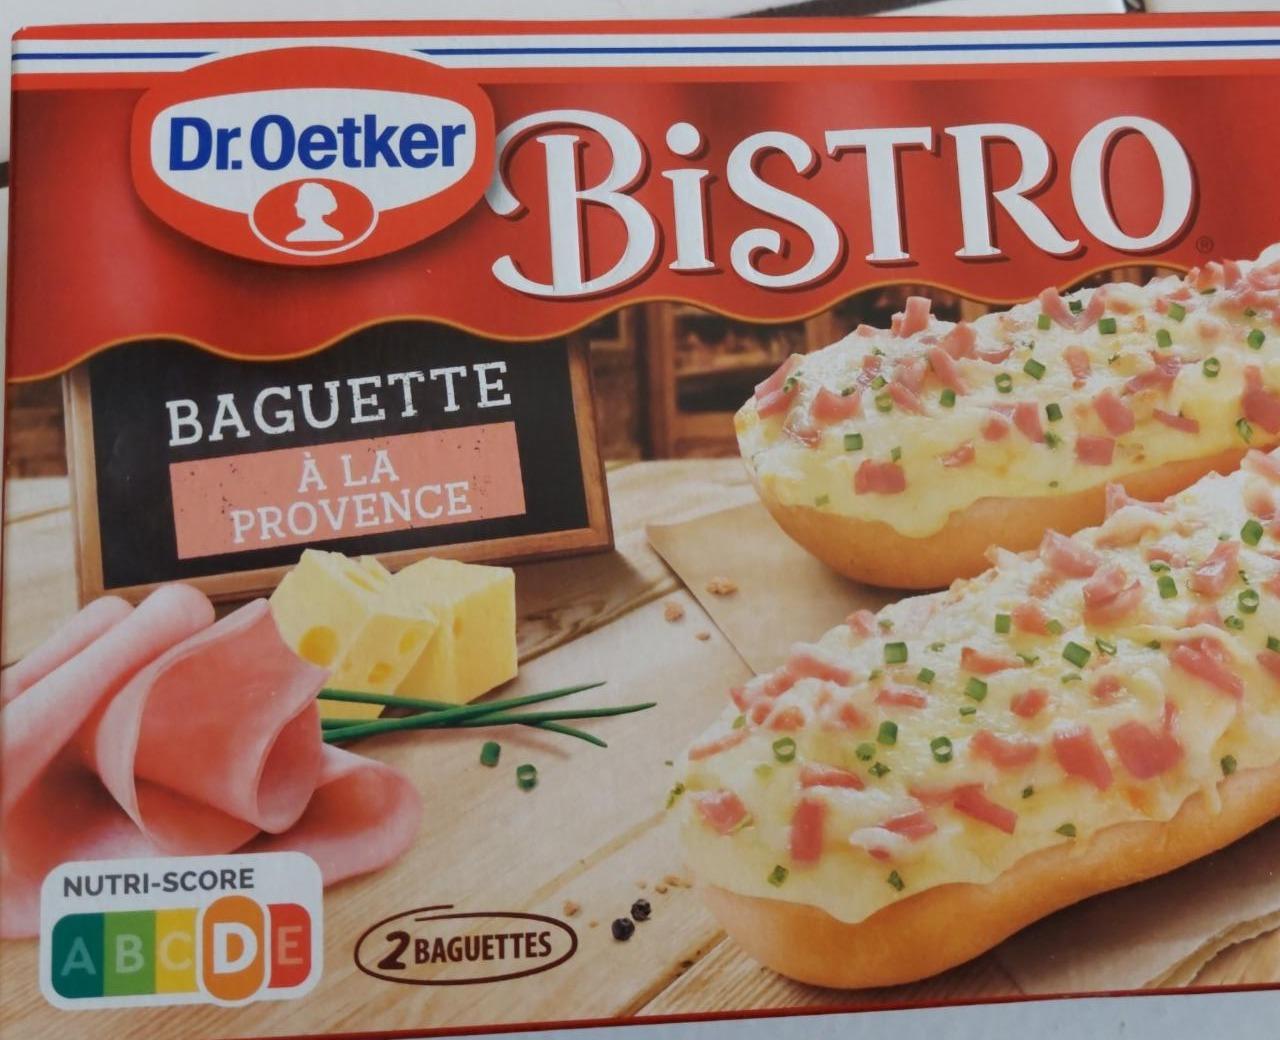 Bistro Baguette à la Provence a Dr.Oetker - nutriční kJ kalorie, hodnoty